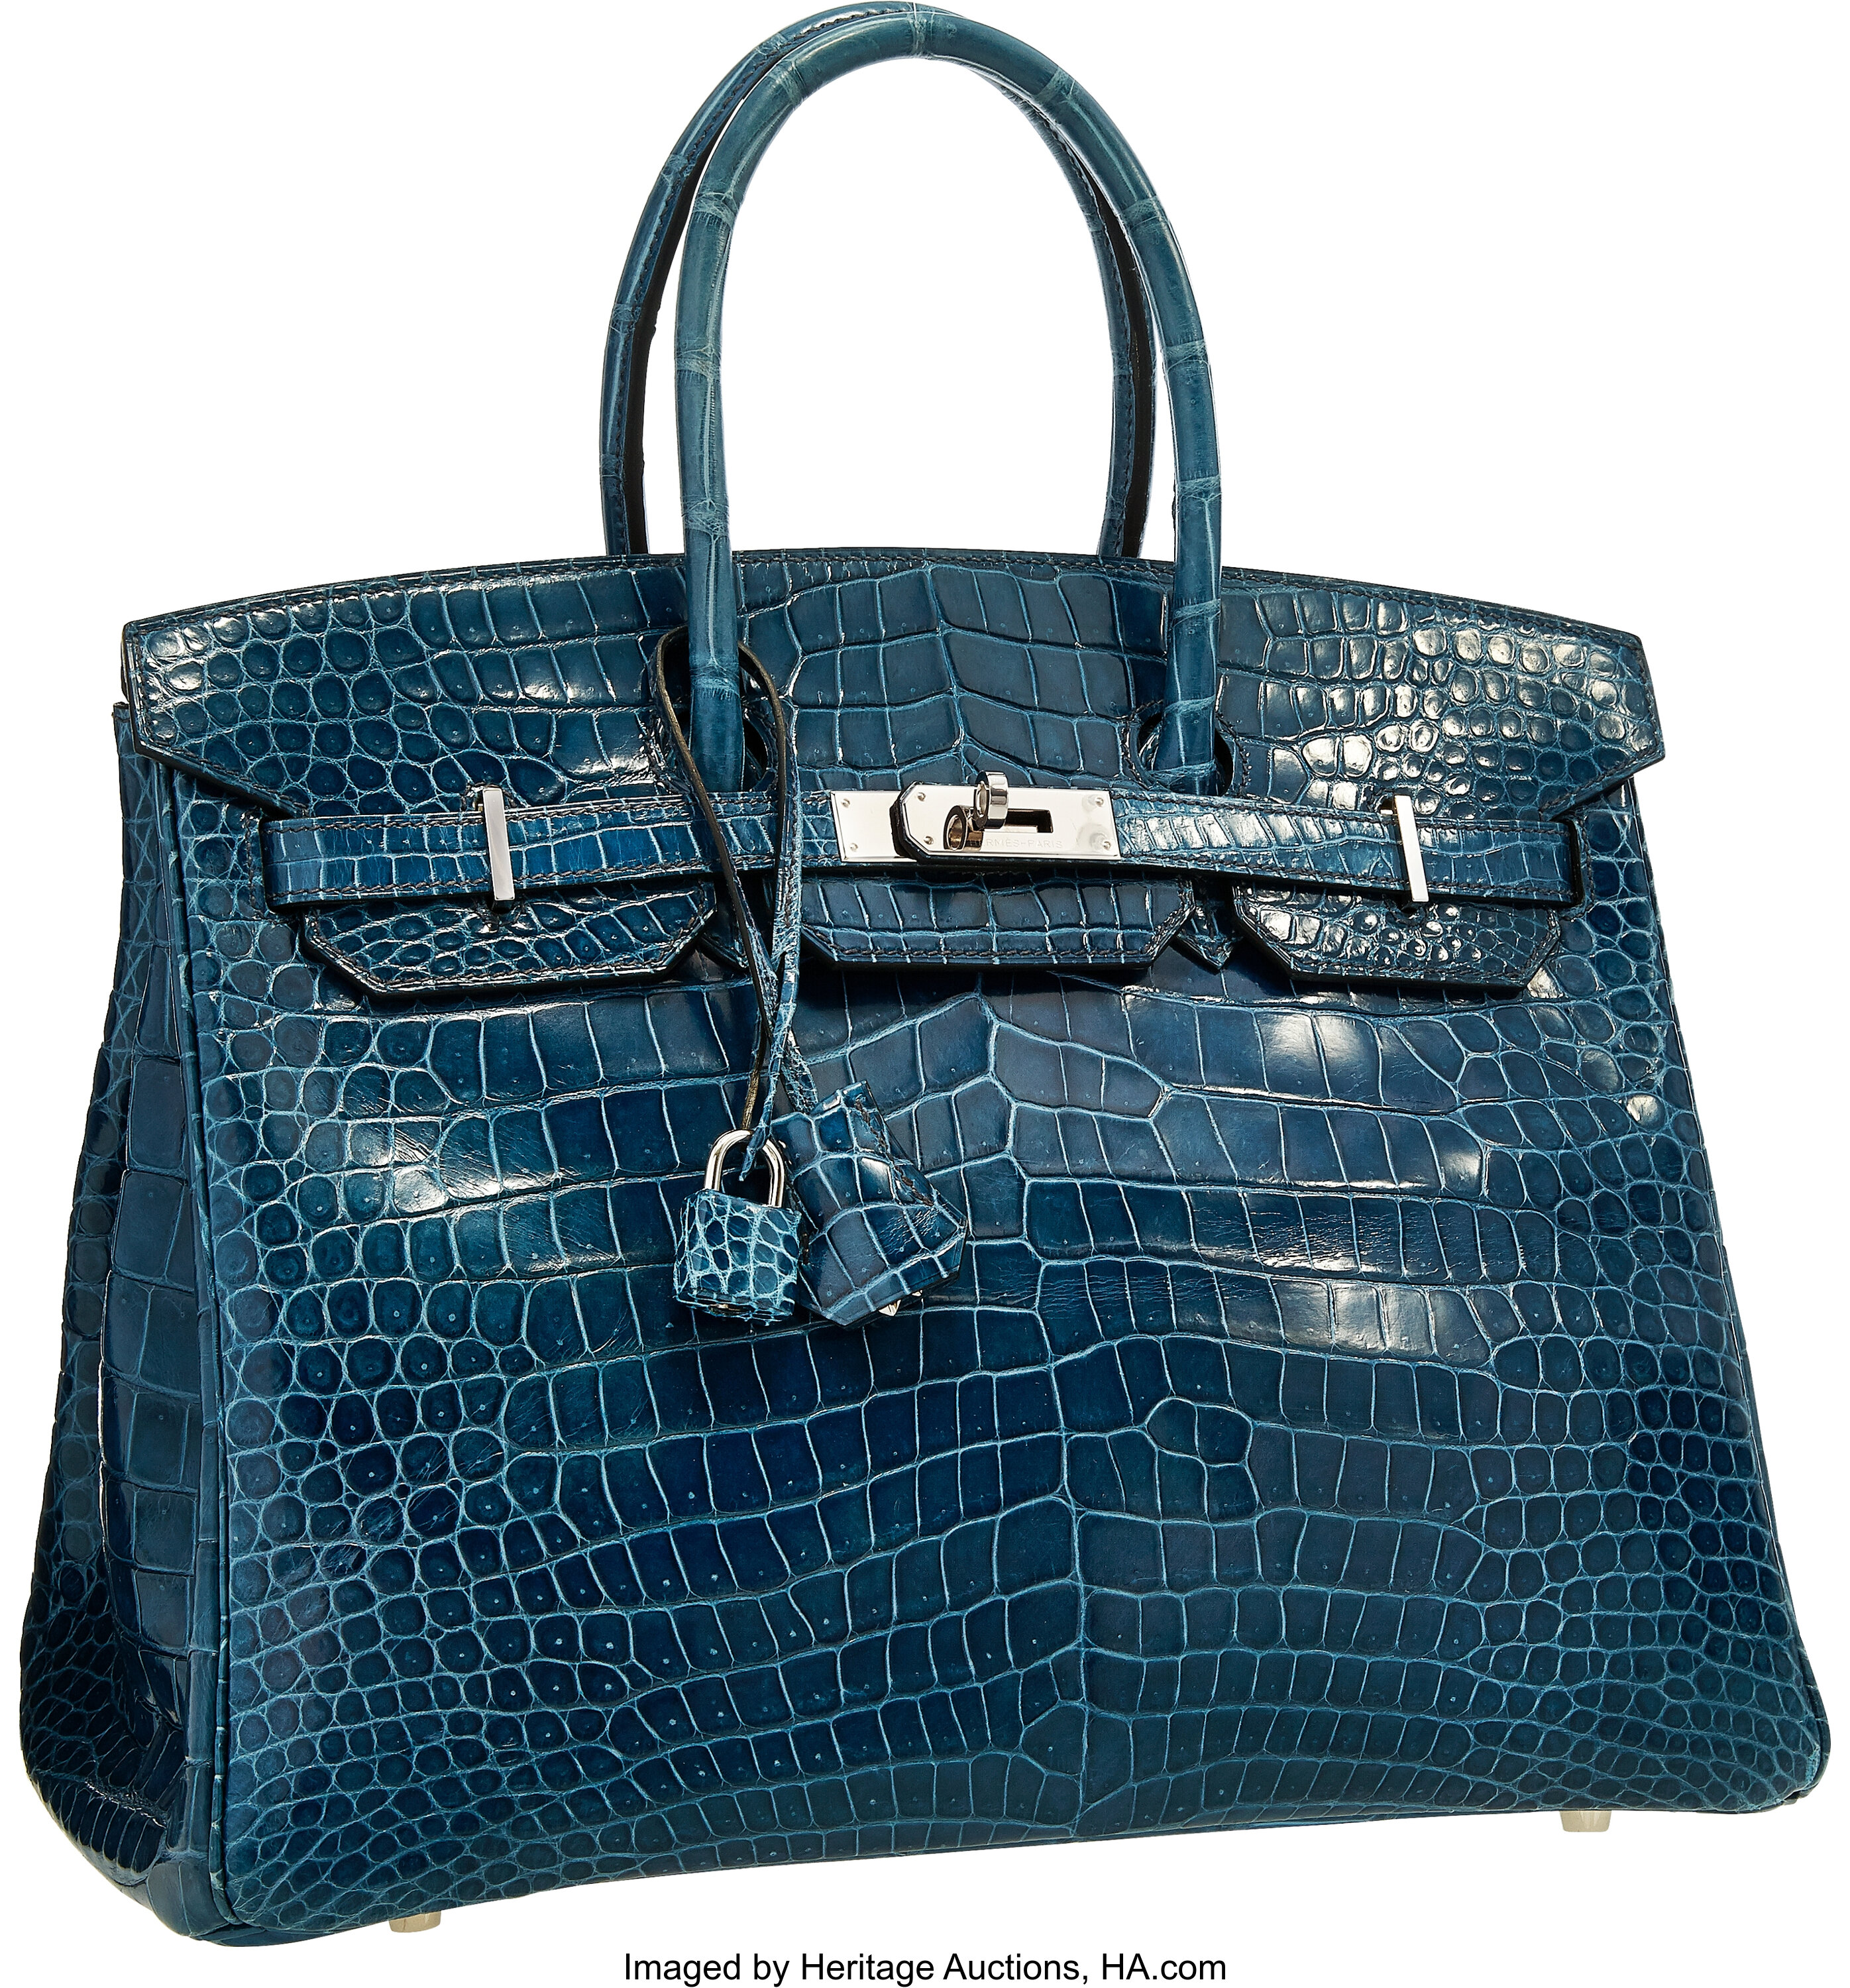 Hermes 35cm Shiny Blue Roi Porosus Crocodile Birkin Bag with | Lot ...